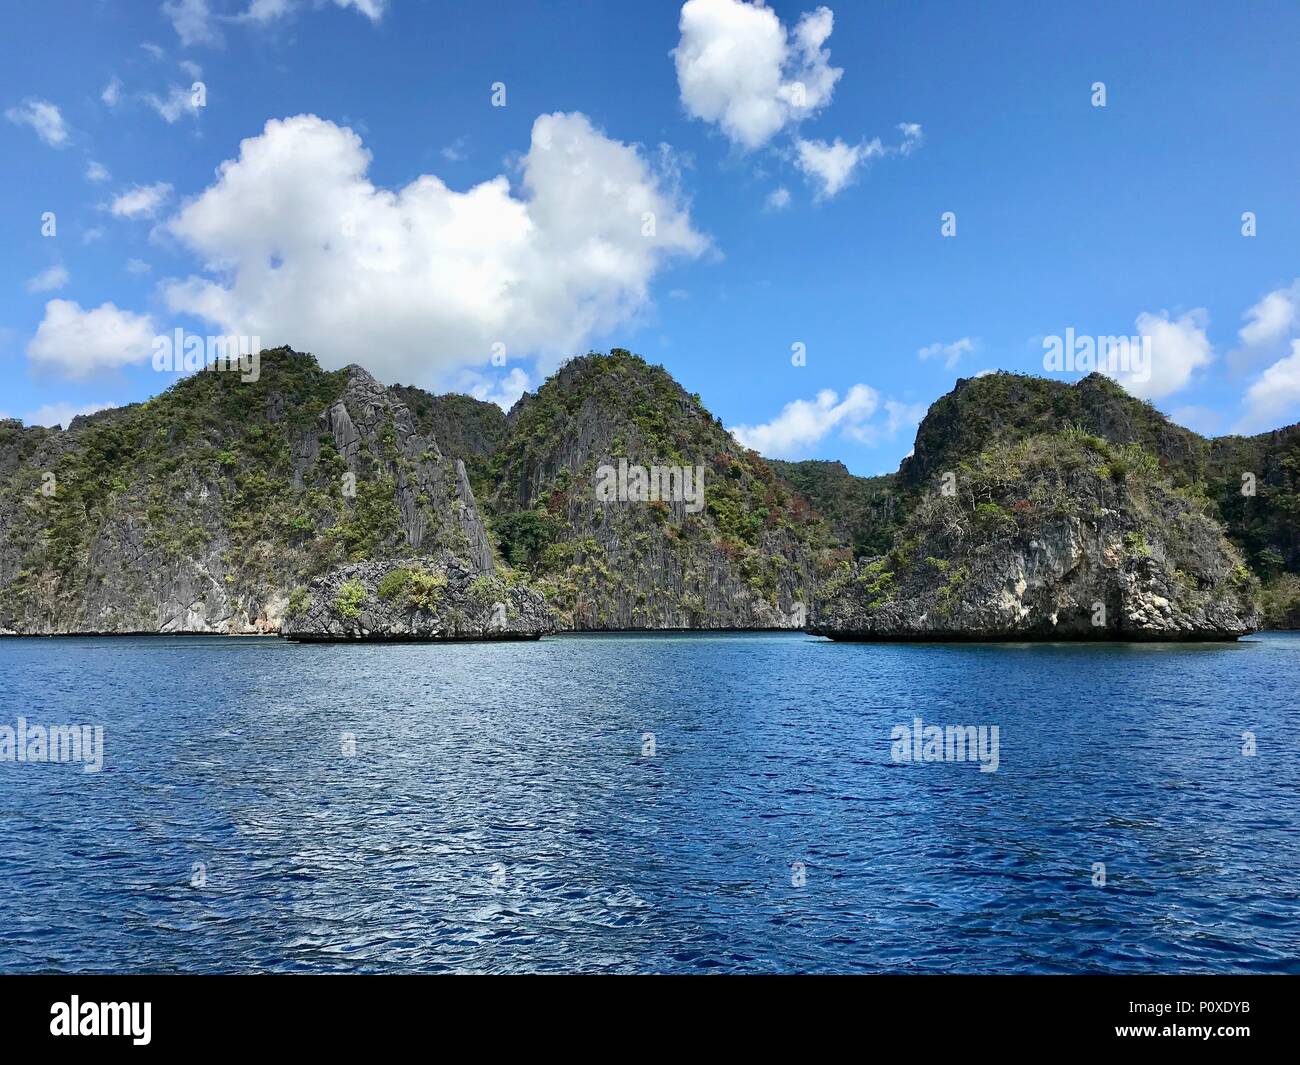 The beauty of the island of Coron, Palawan, Philippines. Stock Photo